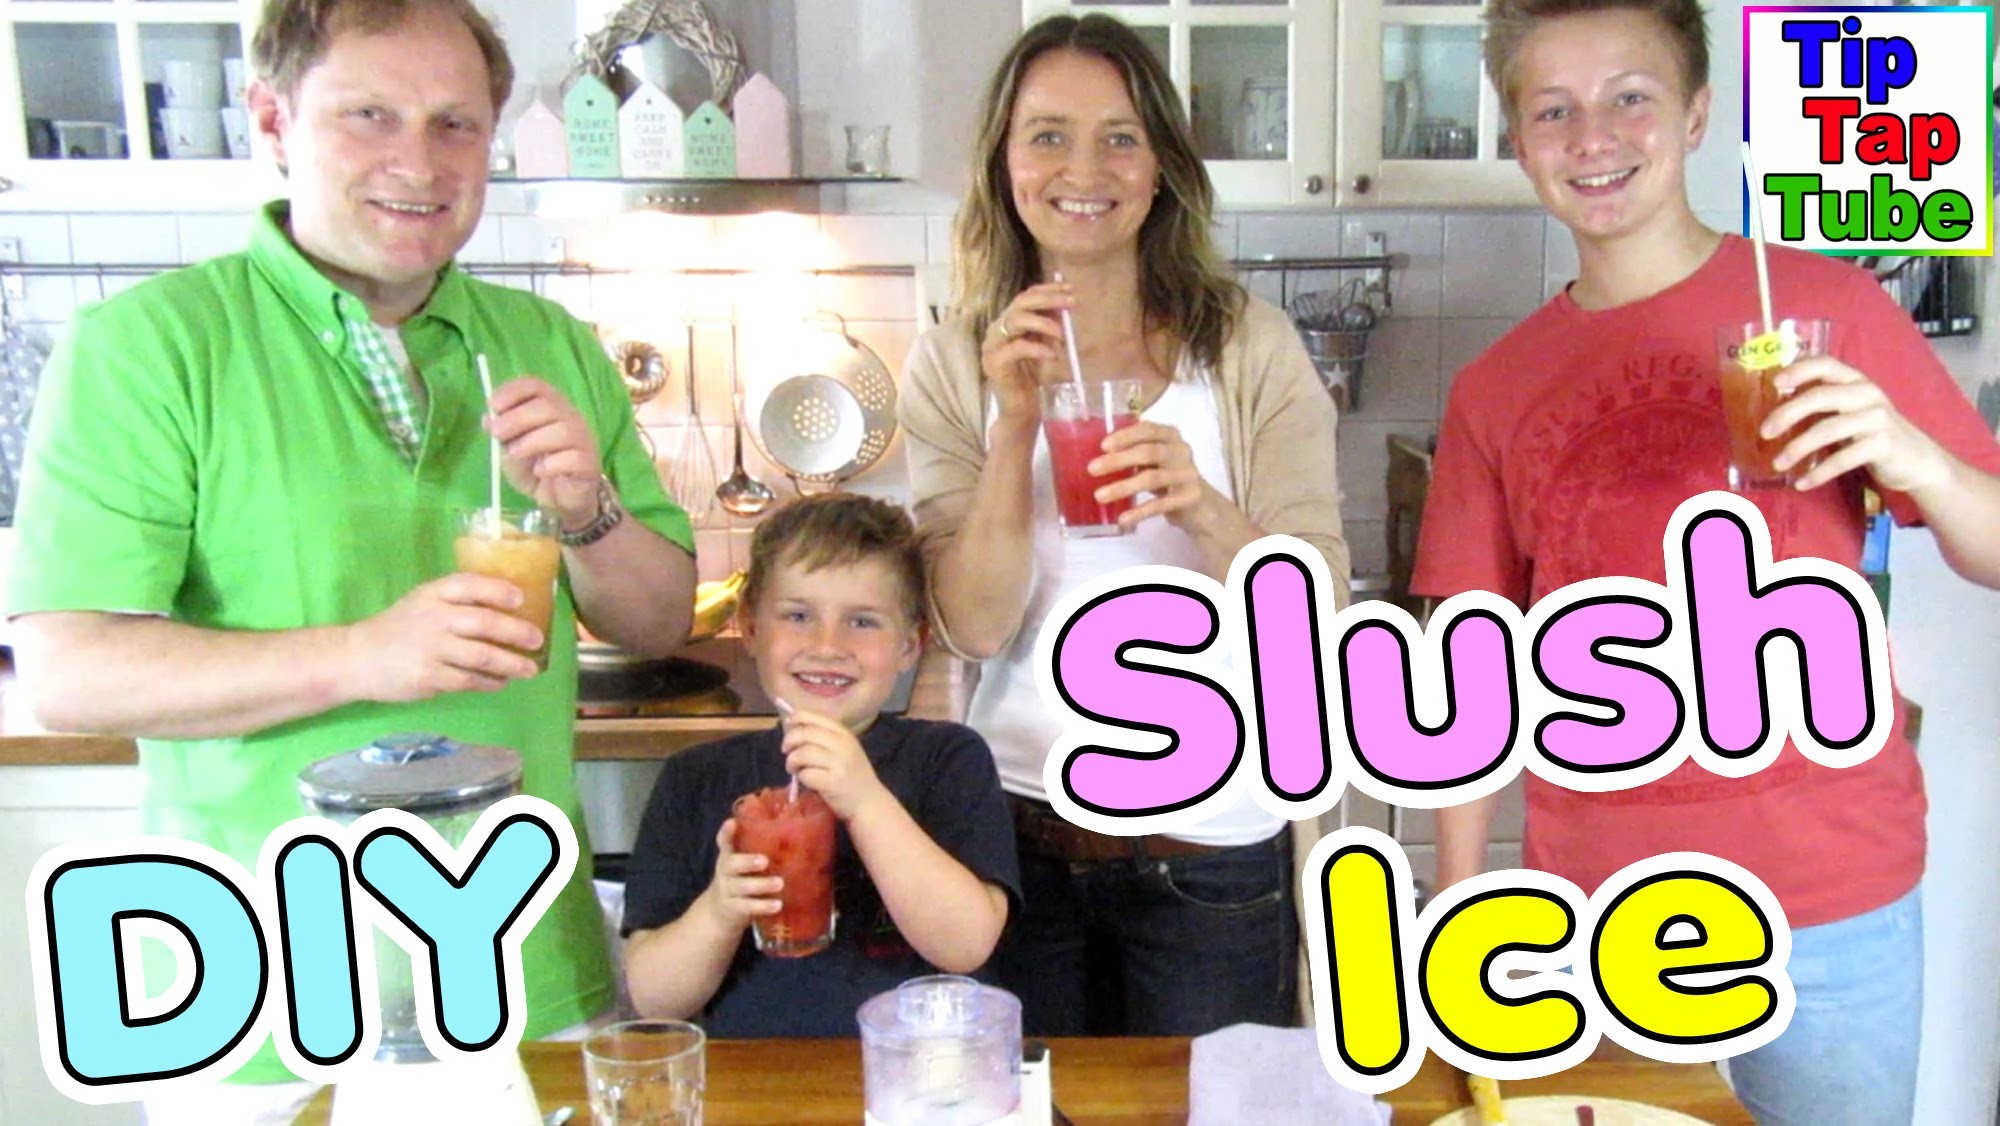 Eis Slush selber machen DIY Slush Ice auf 4 verschiedene Arten Sonntags Video TipTapTube Kinderkanal